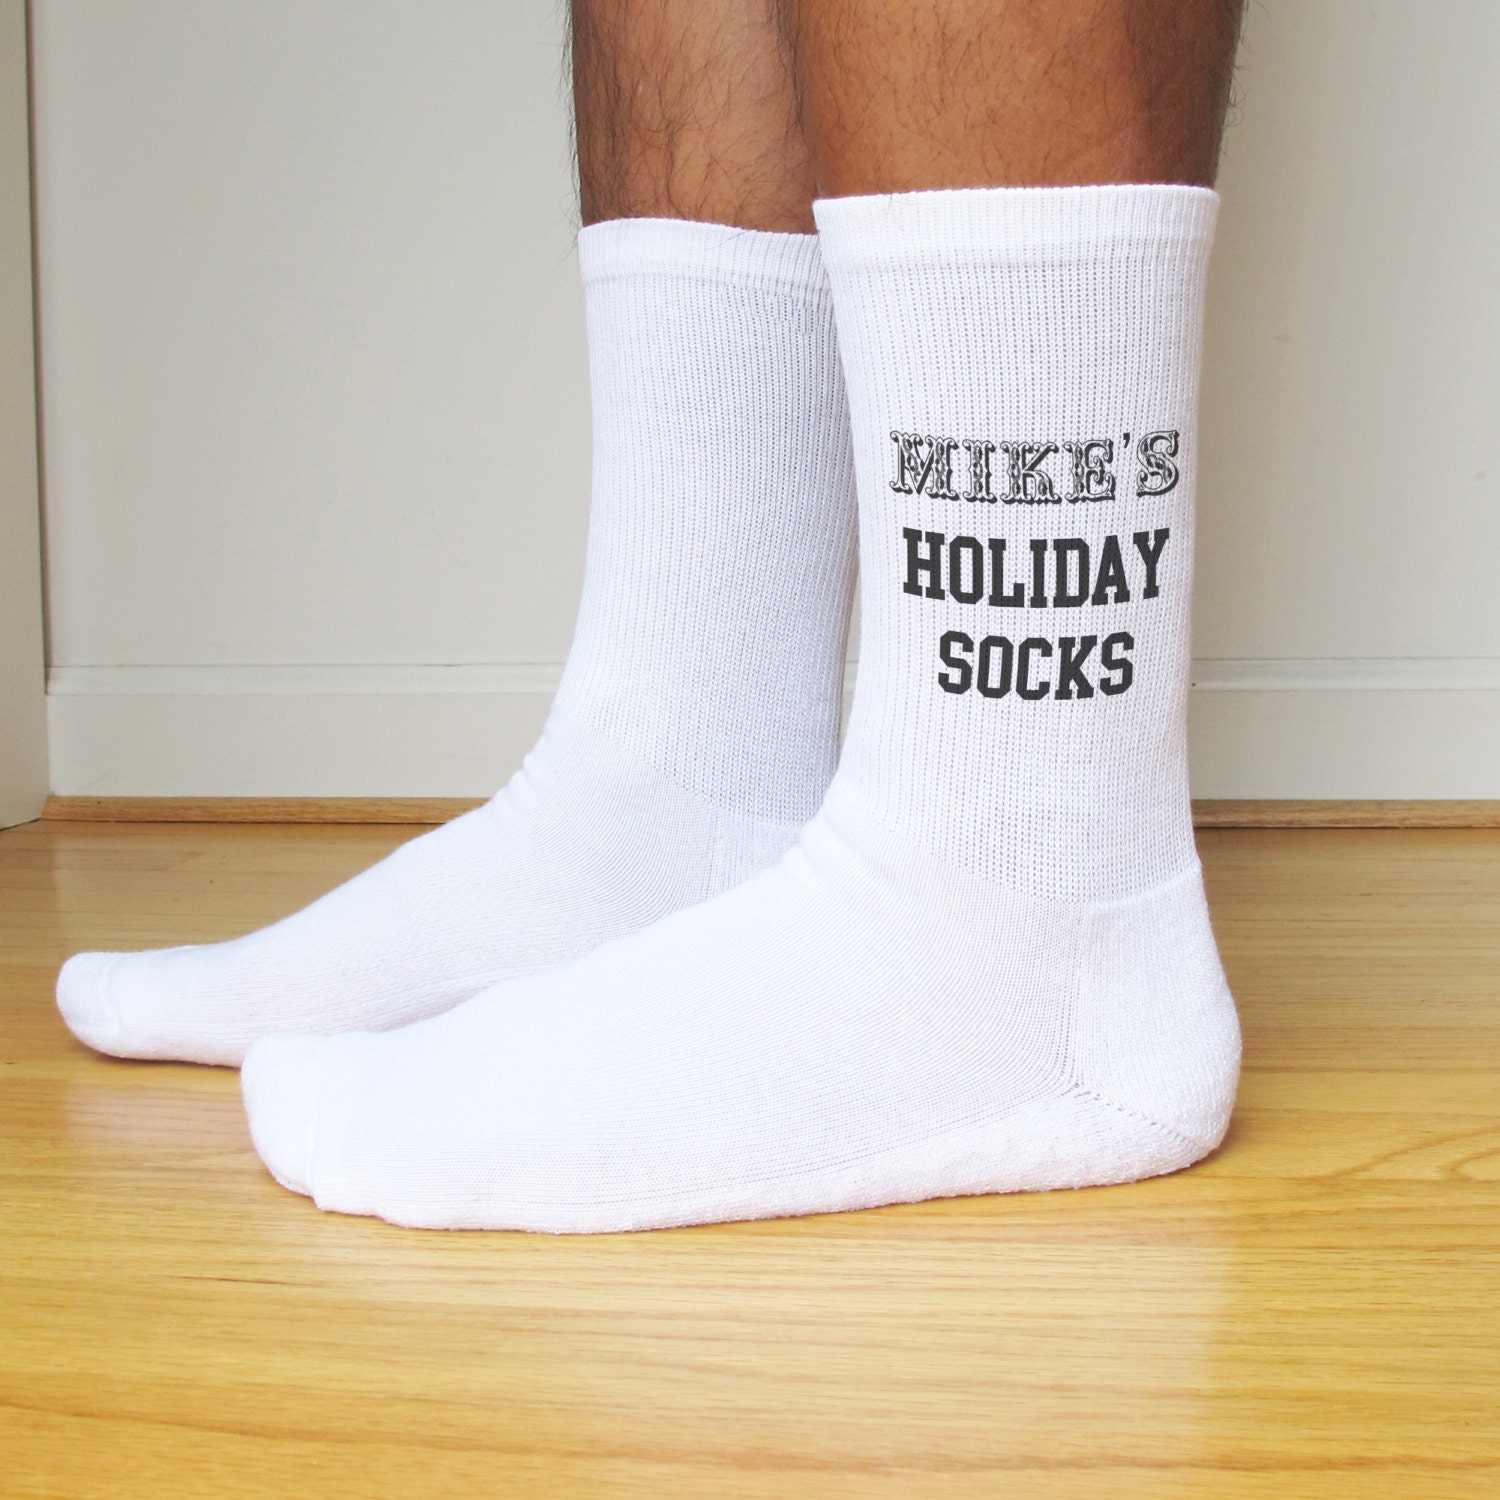 Personalized Holiday Socks for Men set of 3 crew socks